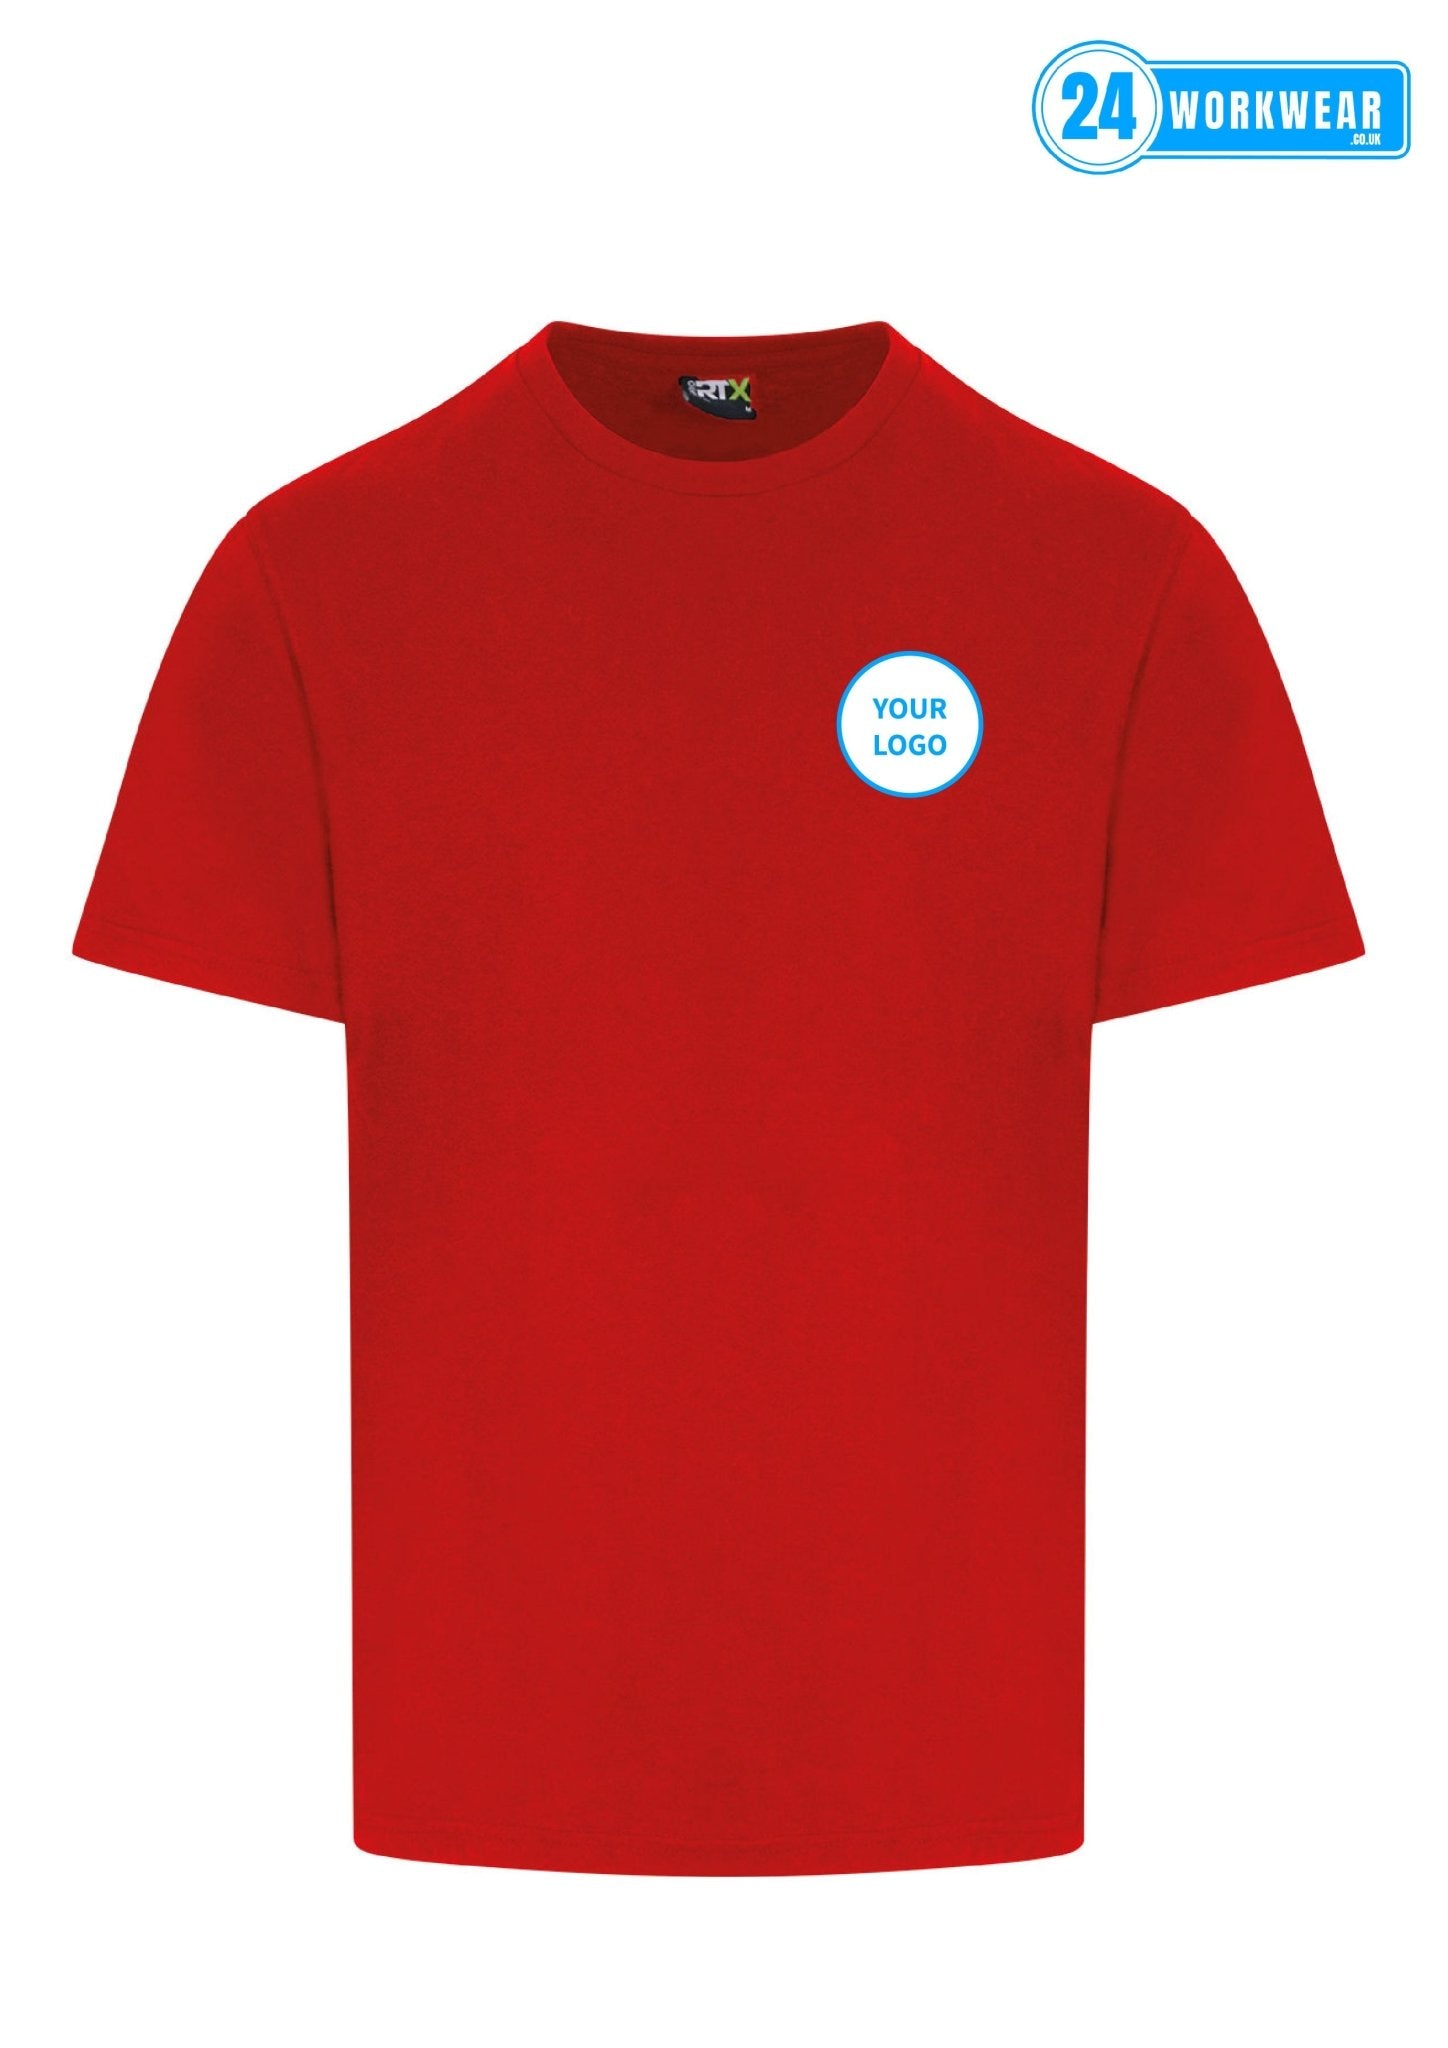 10 x T Shirts Deal - 24 Workwear - T Shirt